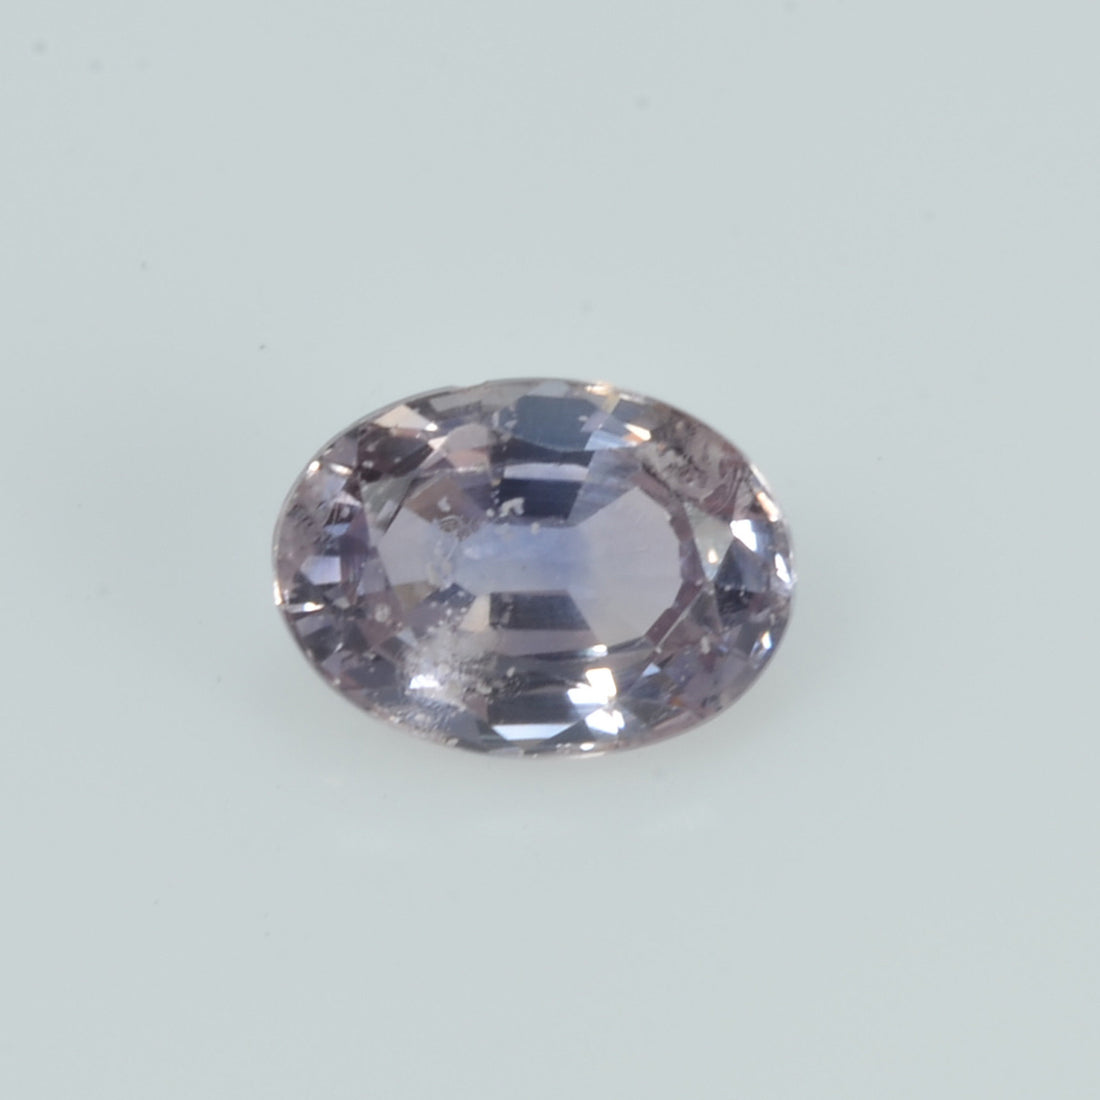 0.92 Cts Natural Lavendor Sapphire Loose Gemstone Oval Cut - Thai Gems Export Ltd.